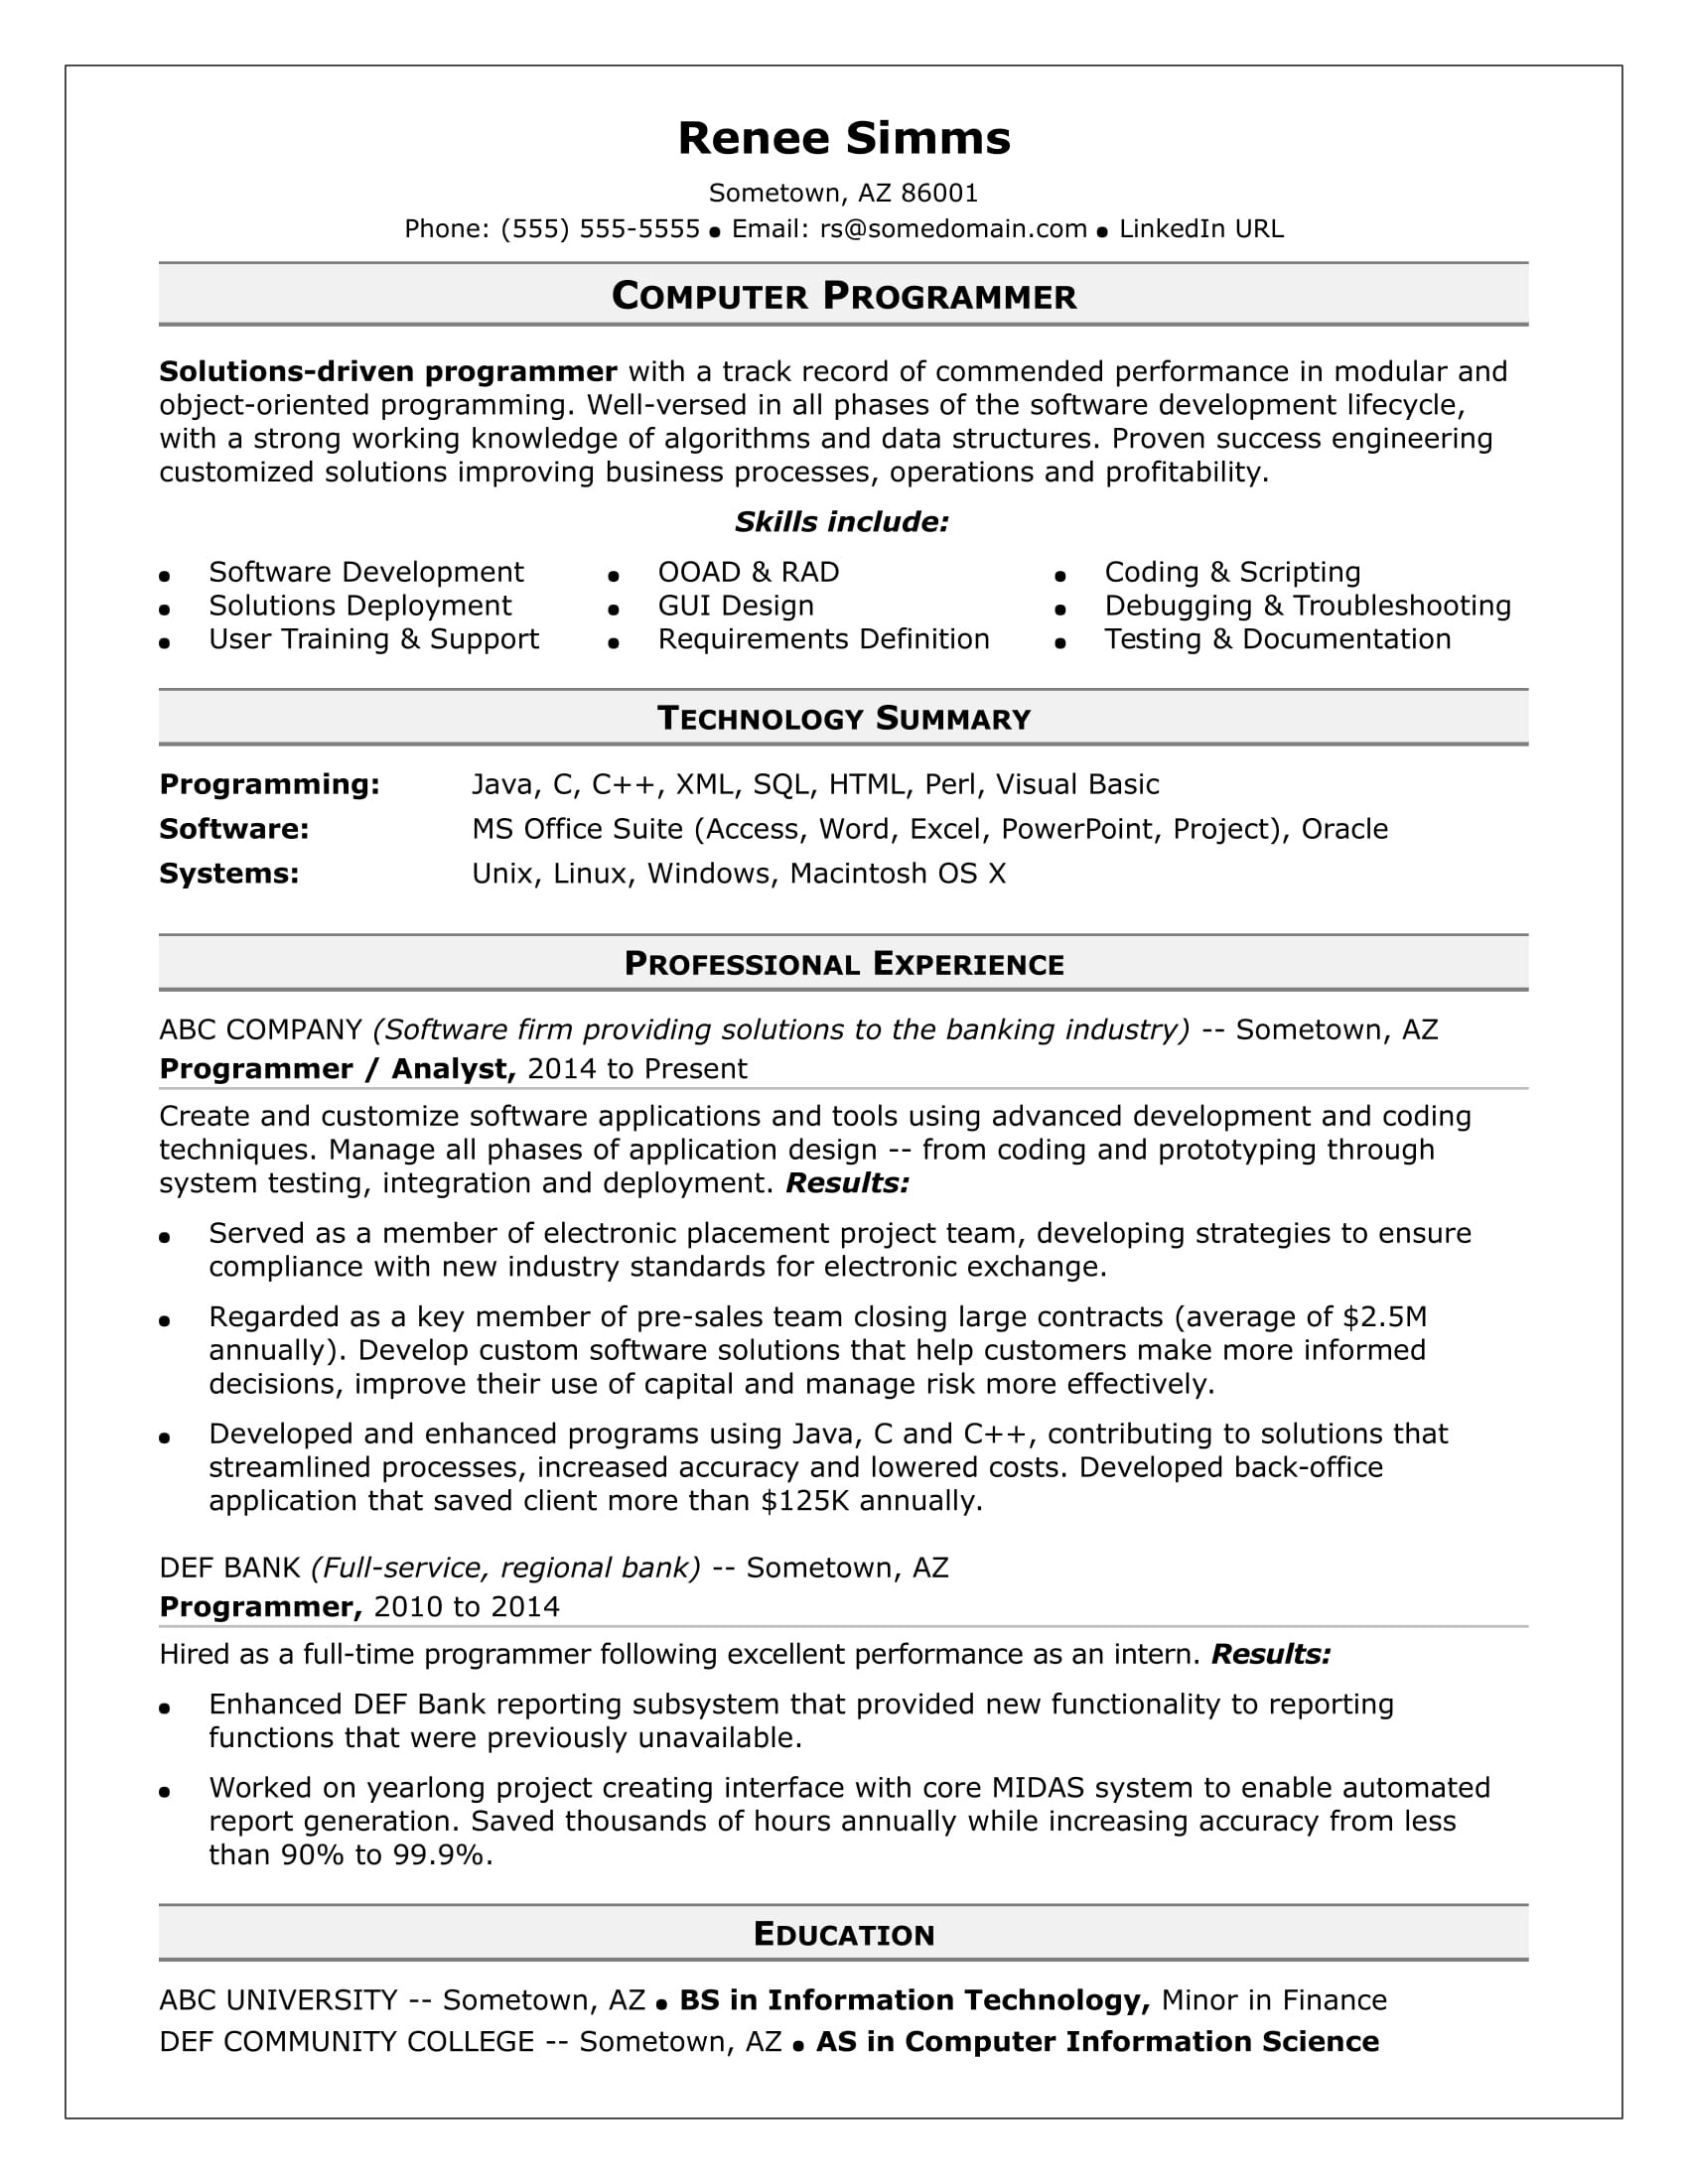 Free Sample Resume for Computer Programmer Sample Resume for A Midlevel Computer Programmer Monster.com